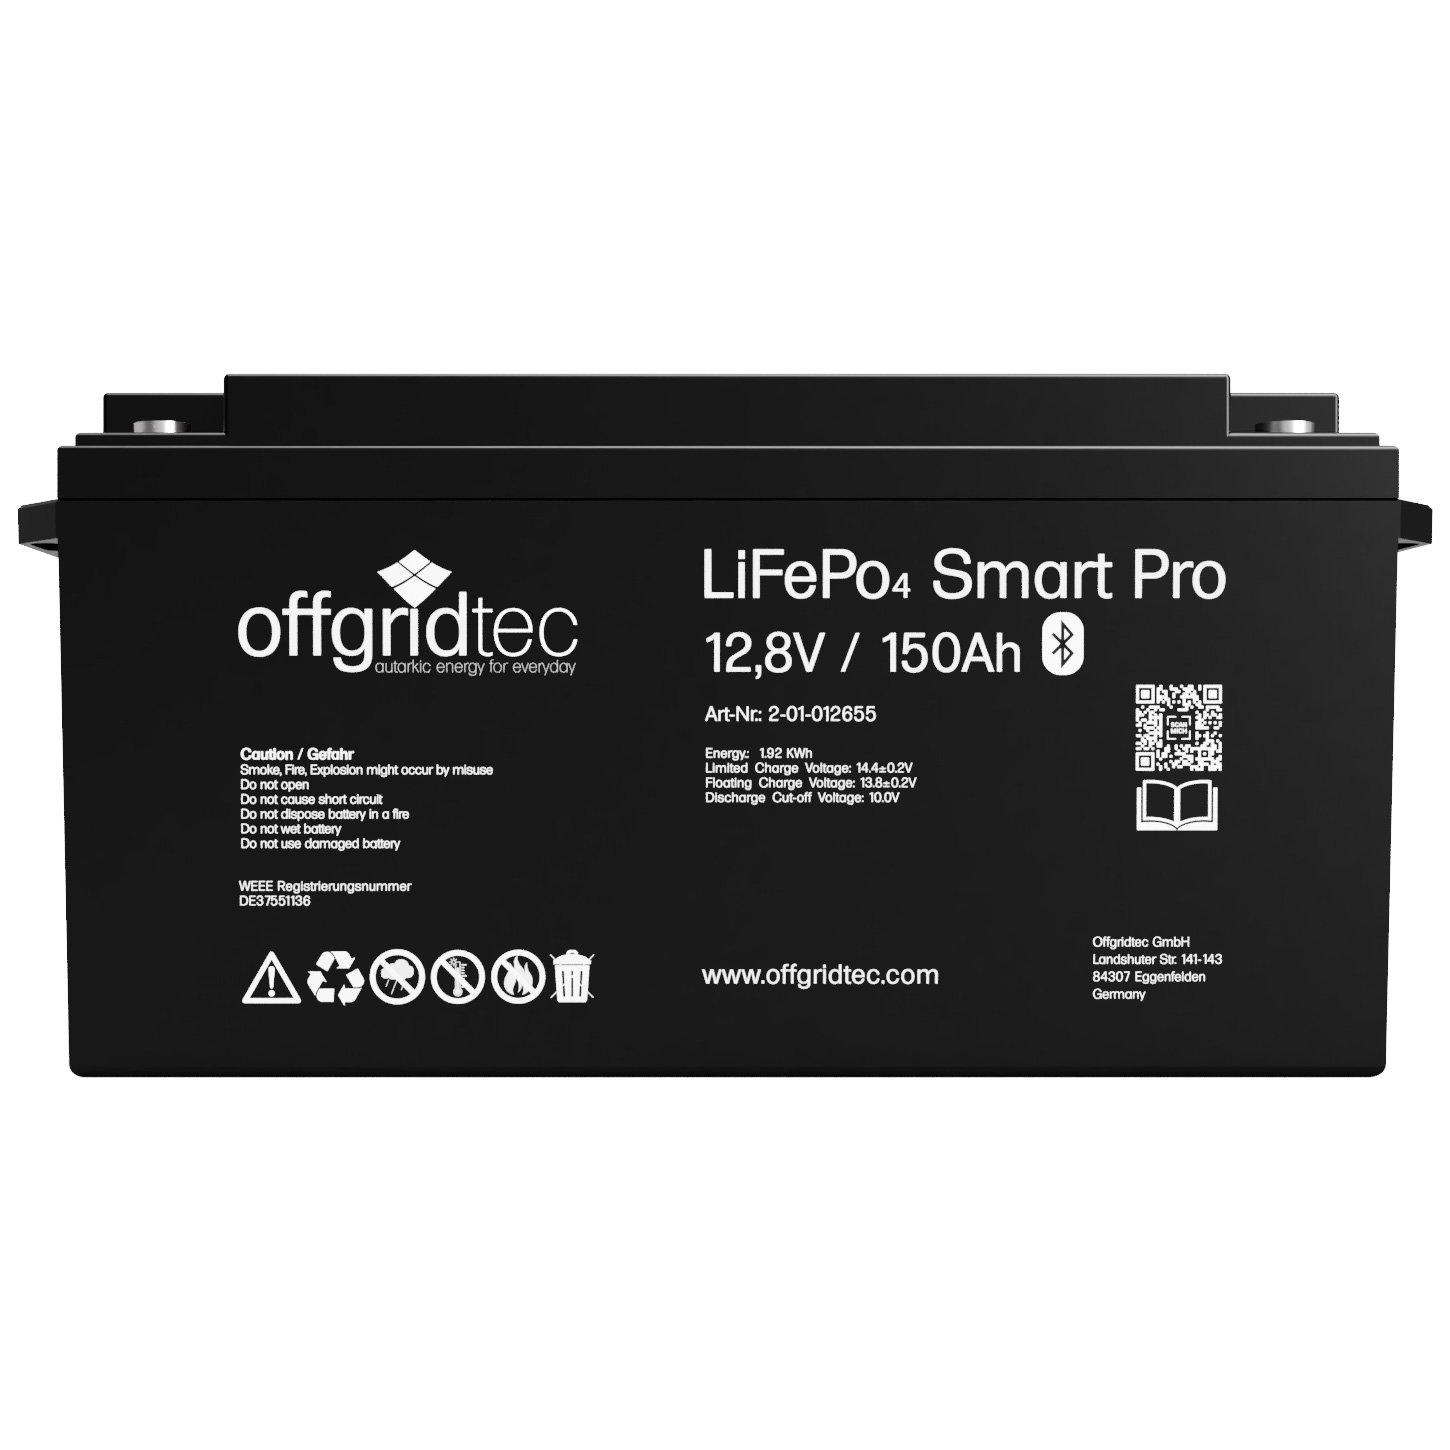 Offgridtec Lifepo4 Smart-Pro 12/150 battery 12.8V 1920Wh 150AH